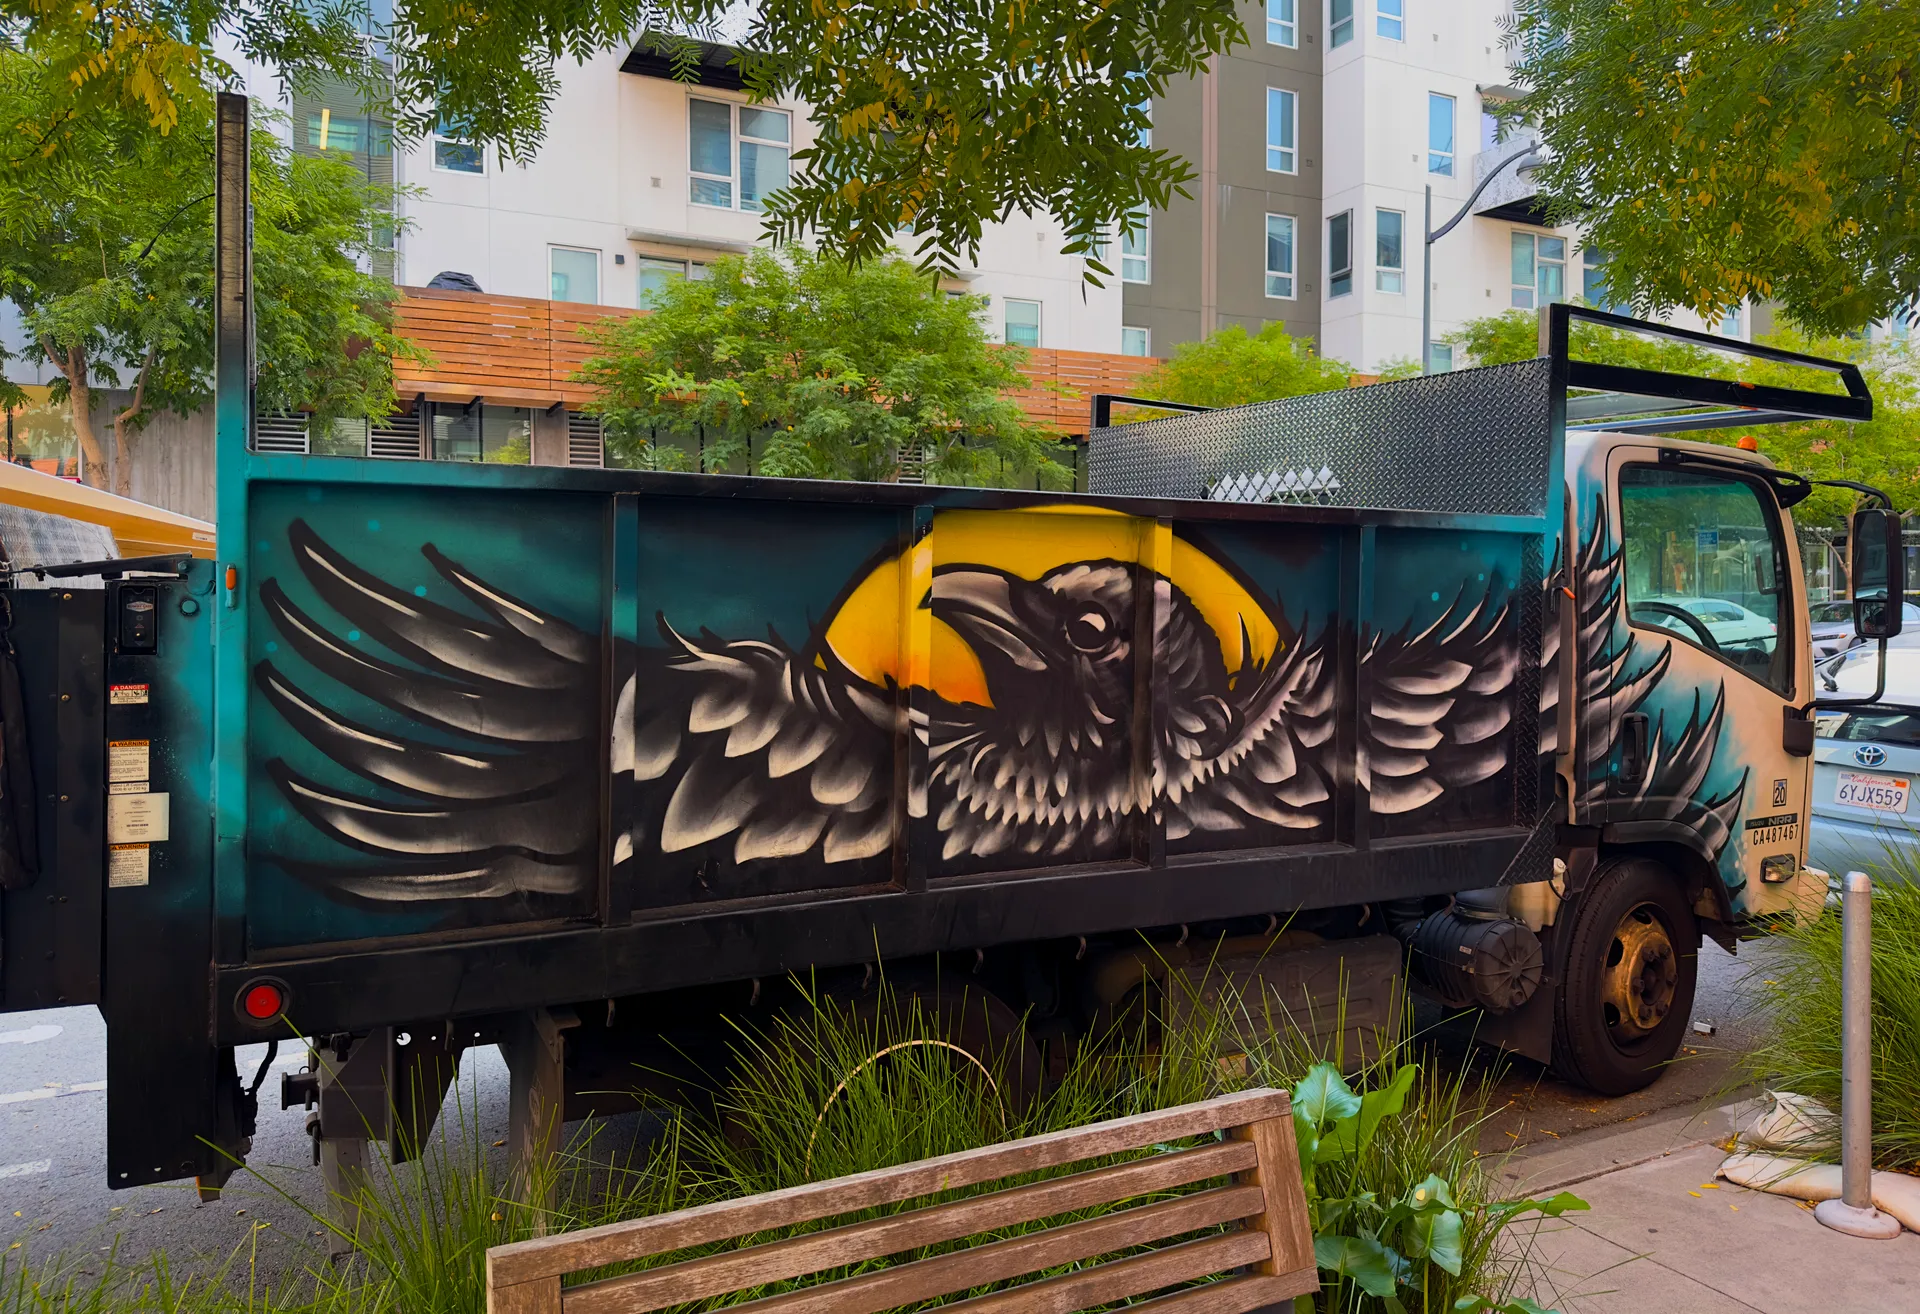 Raven graffiti on a truck